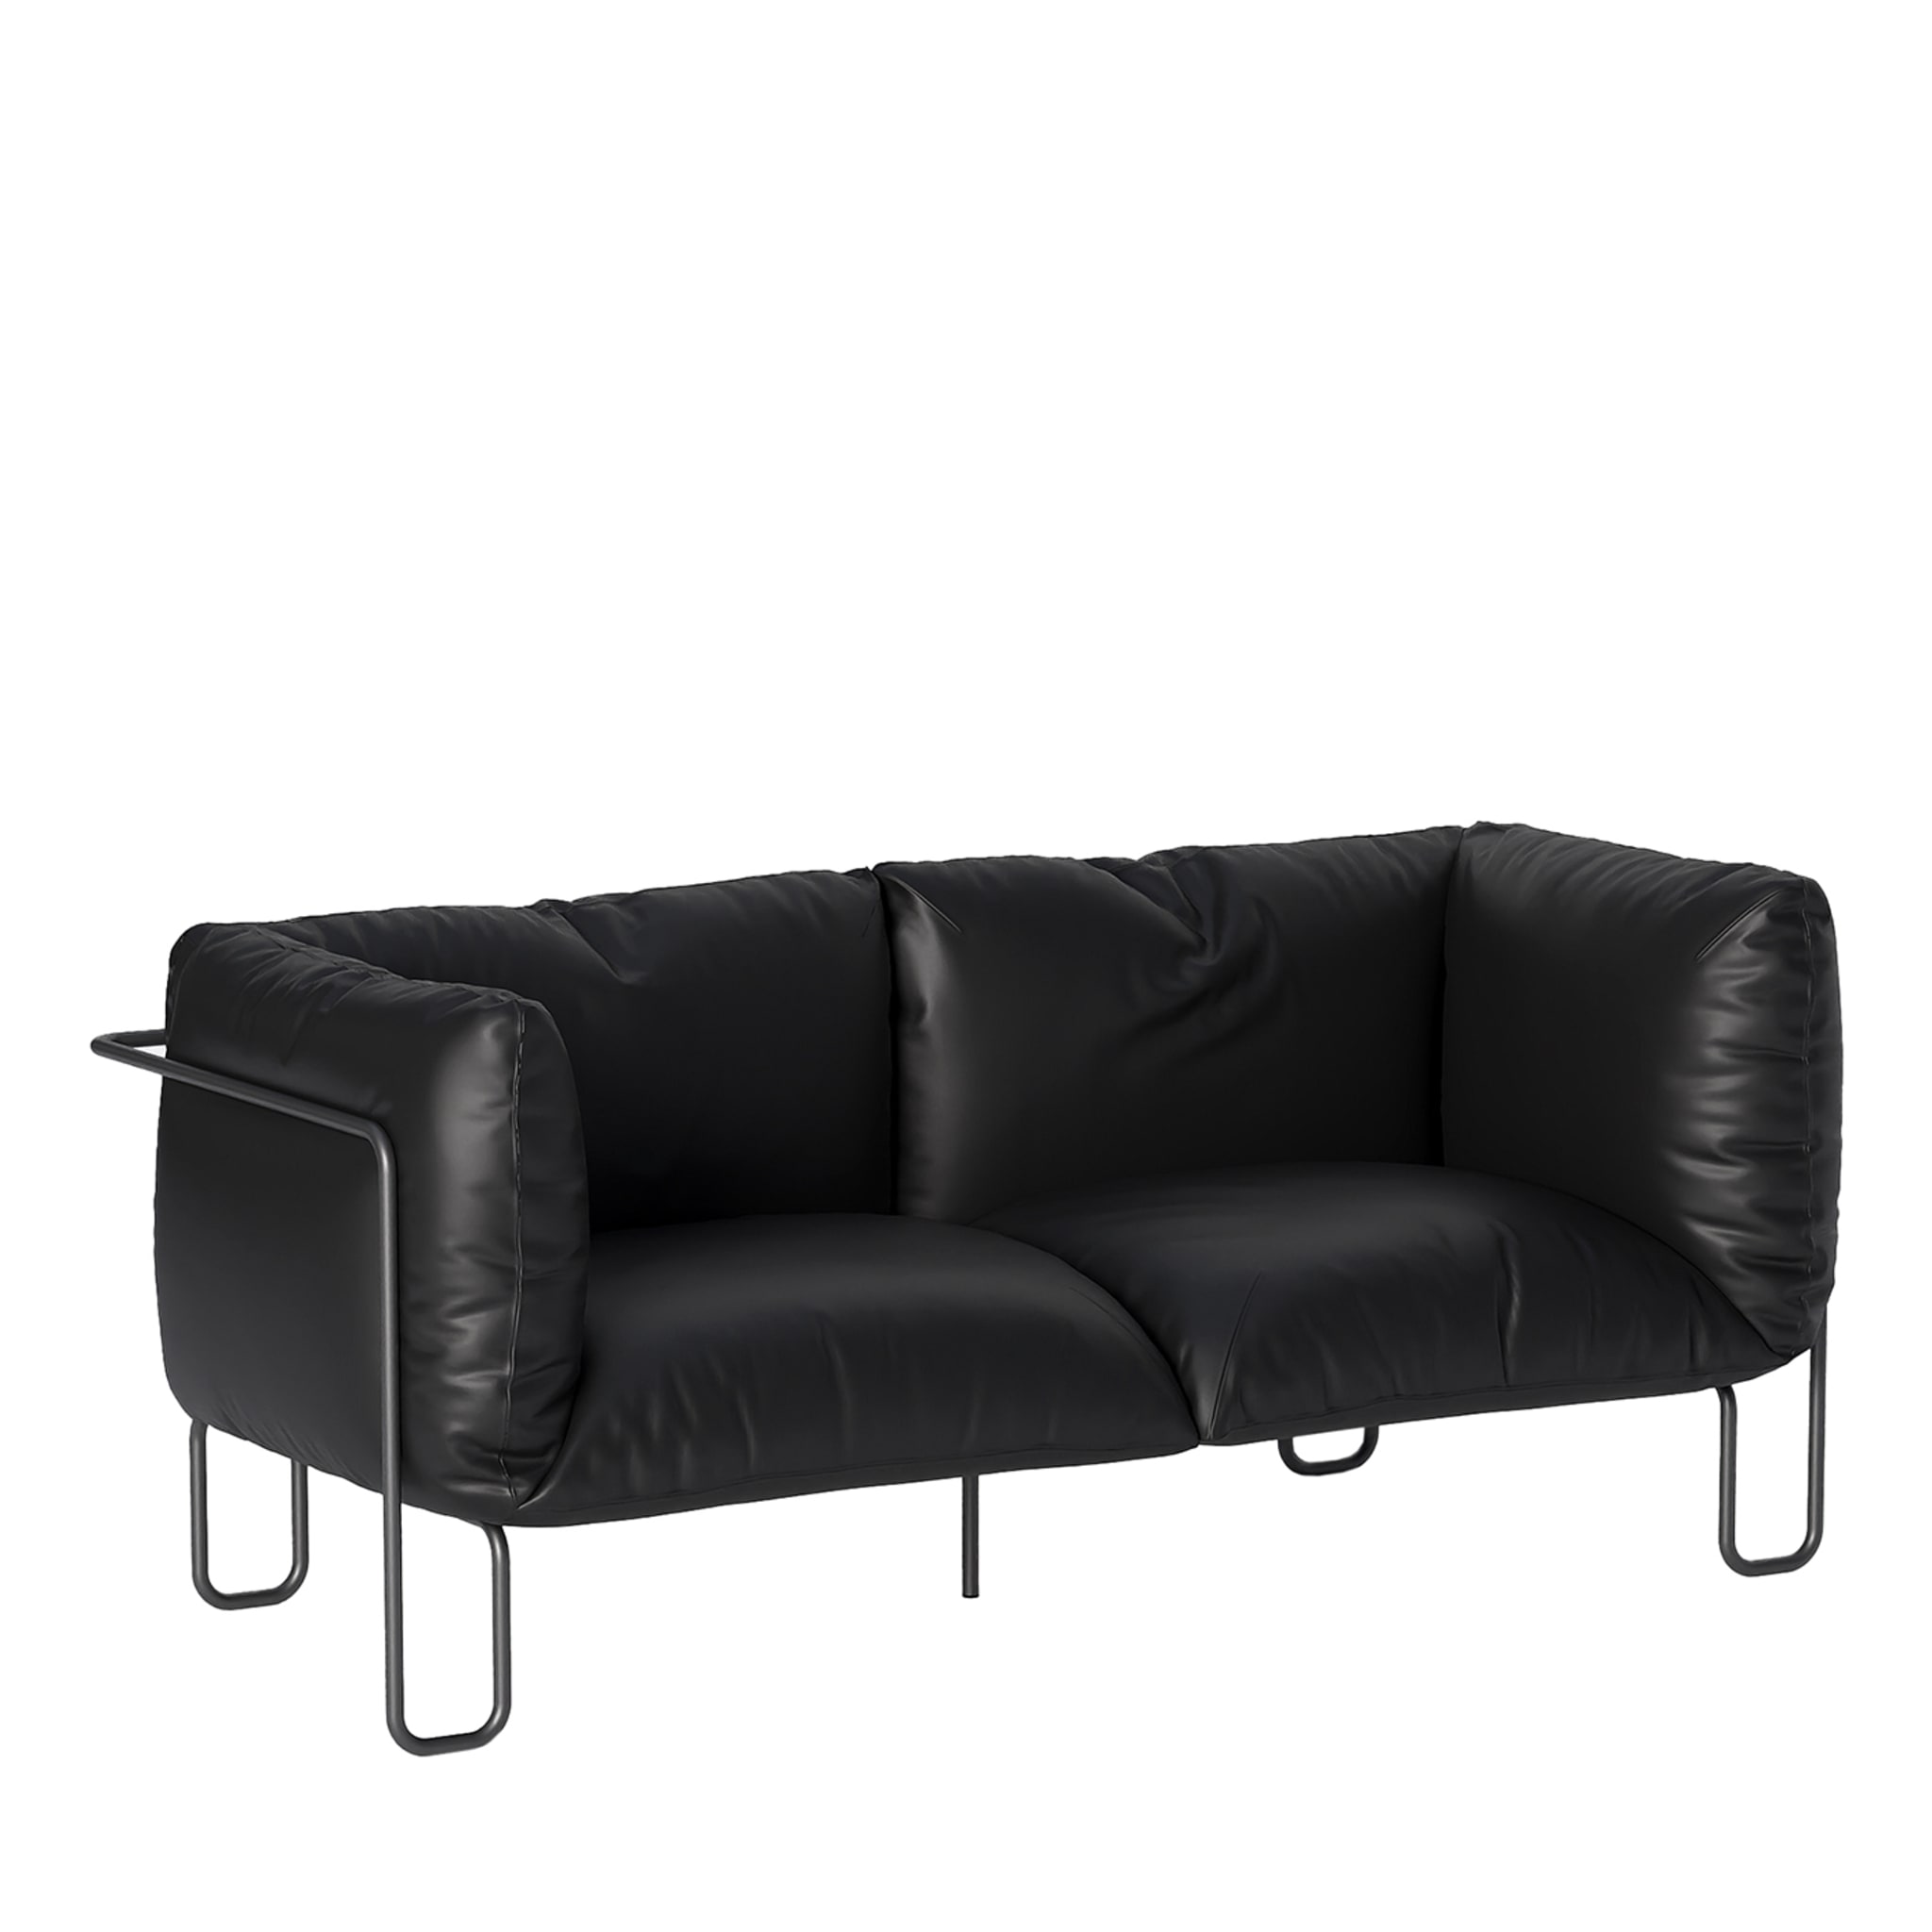 Fargo Soft 150 Black Leather Indoor Sofa - Main view